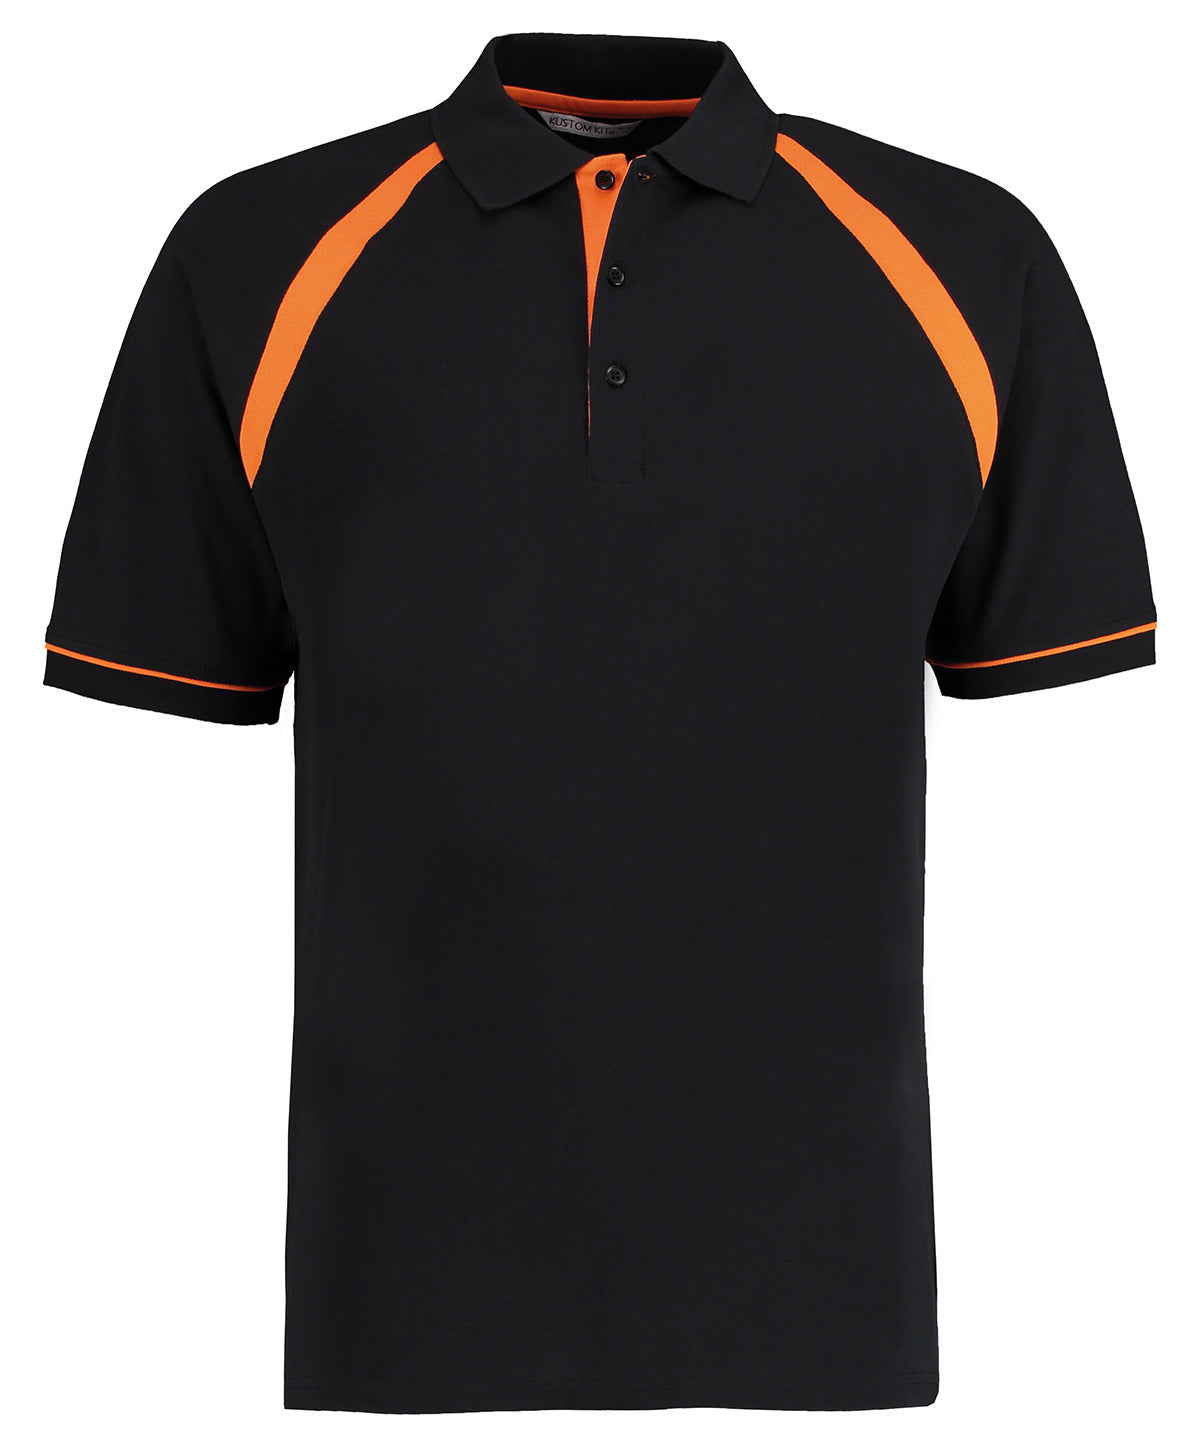 Personalised Polo Shirts - Black Kustom Kit Oak hill polo (classic fit)